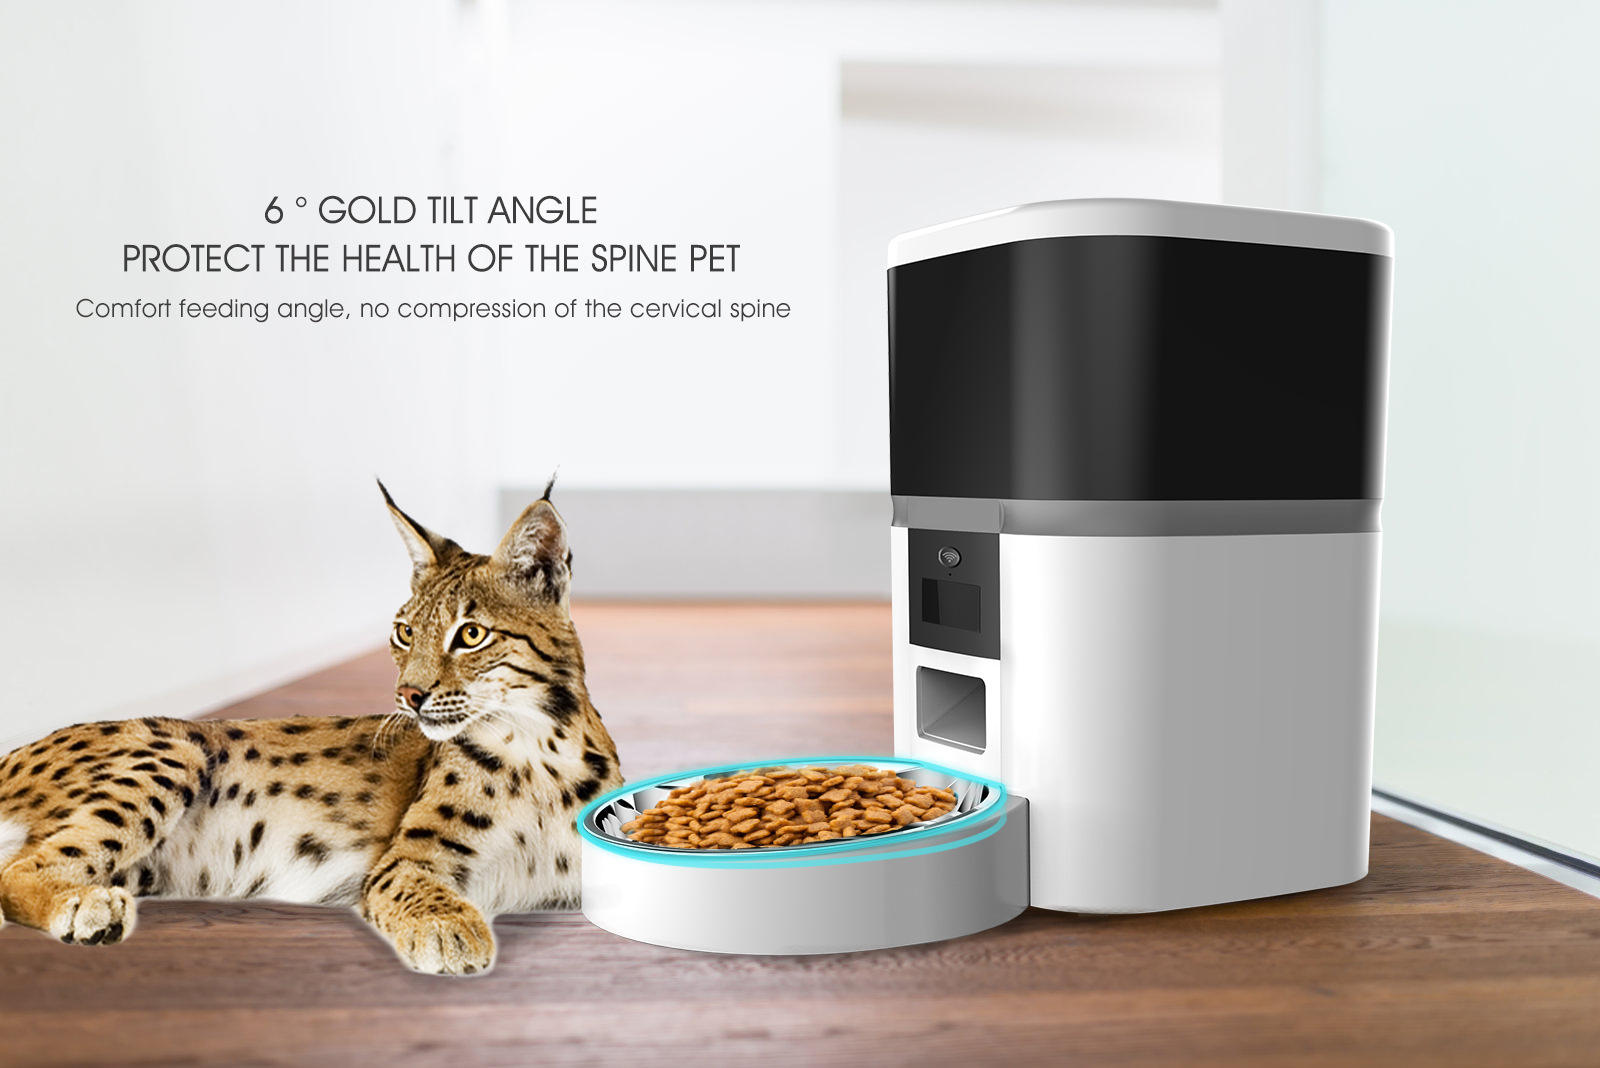 New Smart App Control Full Hd Wifi Pet Camera Food Dispenser 4l Dog Cat Pet Feeder